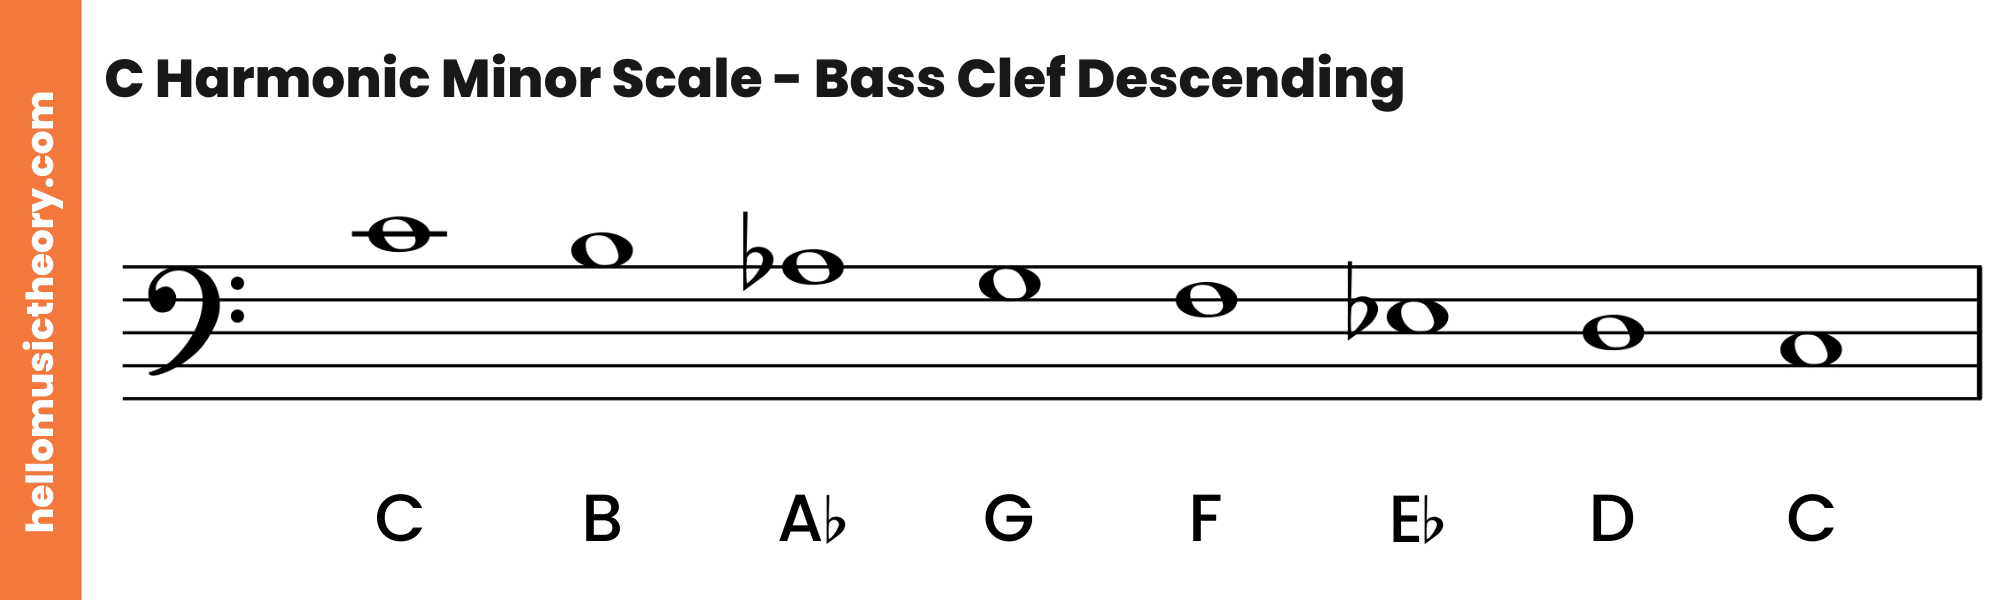 C Harmonic Minor Scale Bass Clef Descending